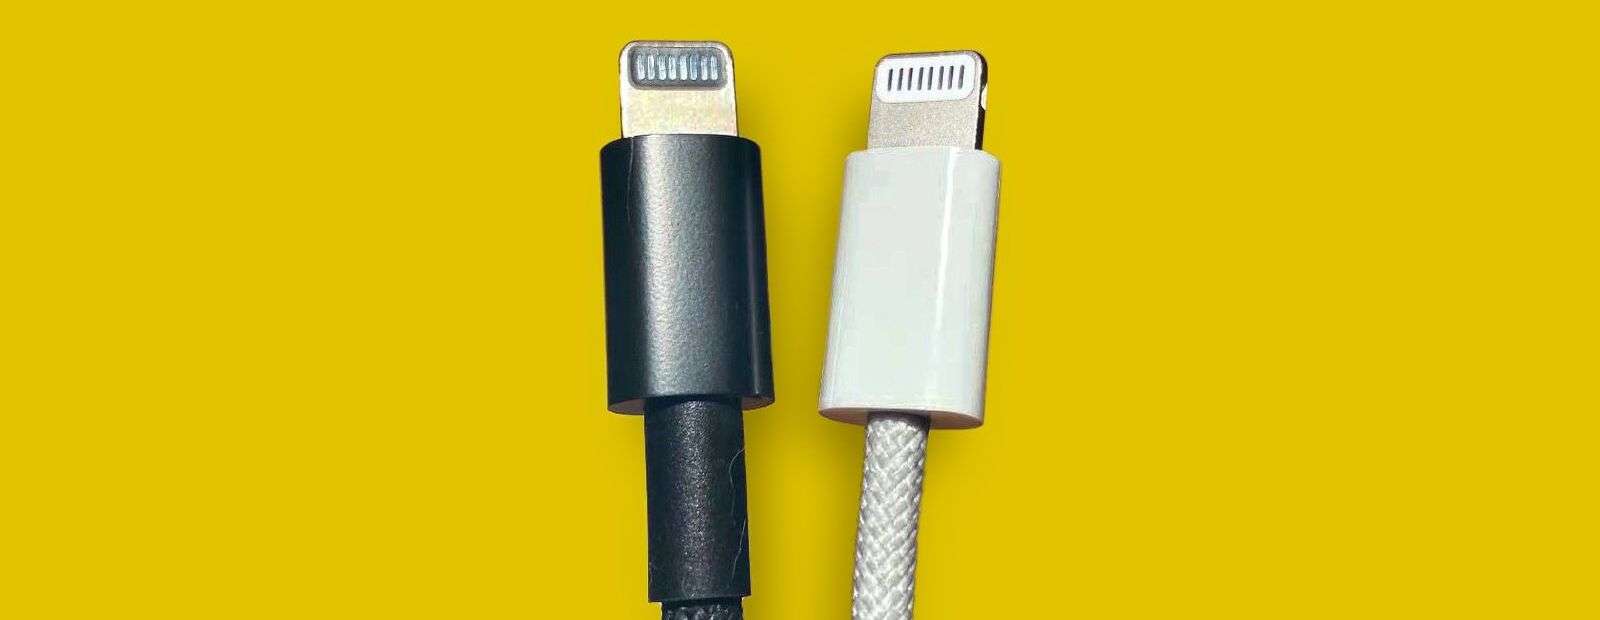 Схема кабеля Айфон - Circuit Lighting Iphone